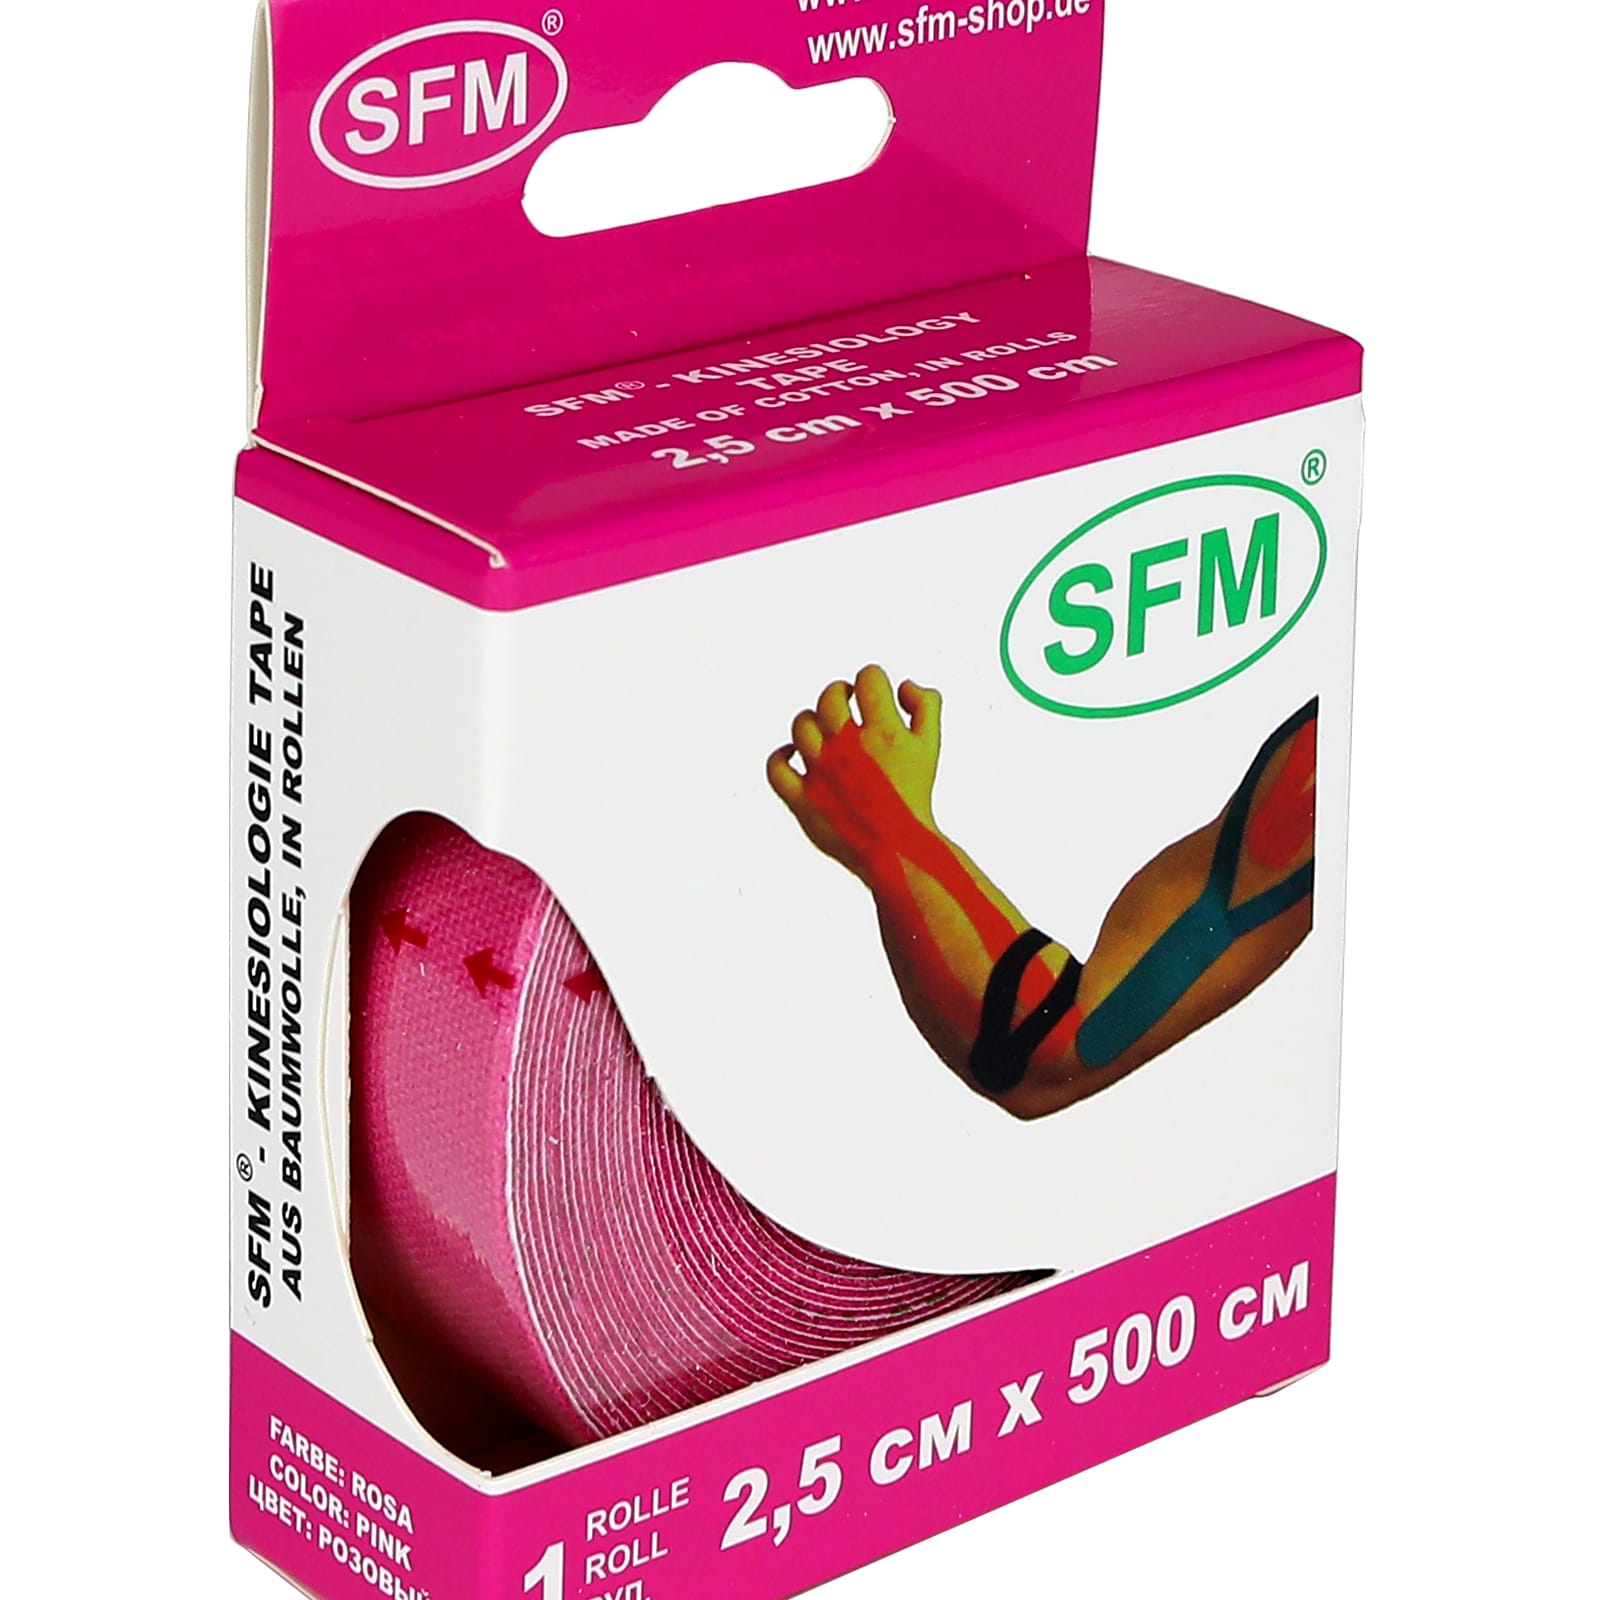 Кинезиотейп SFM Hospital Products Plaster на хлопковой основе 2.5х500 см розового цвета в диспенсере - фото 1